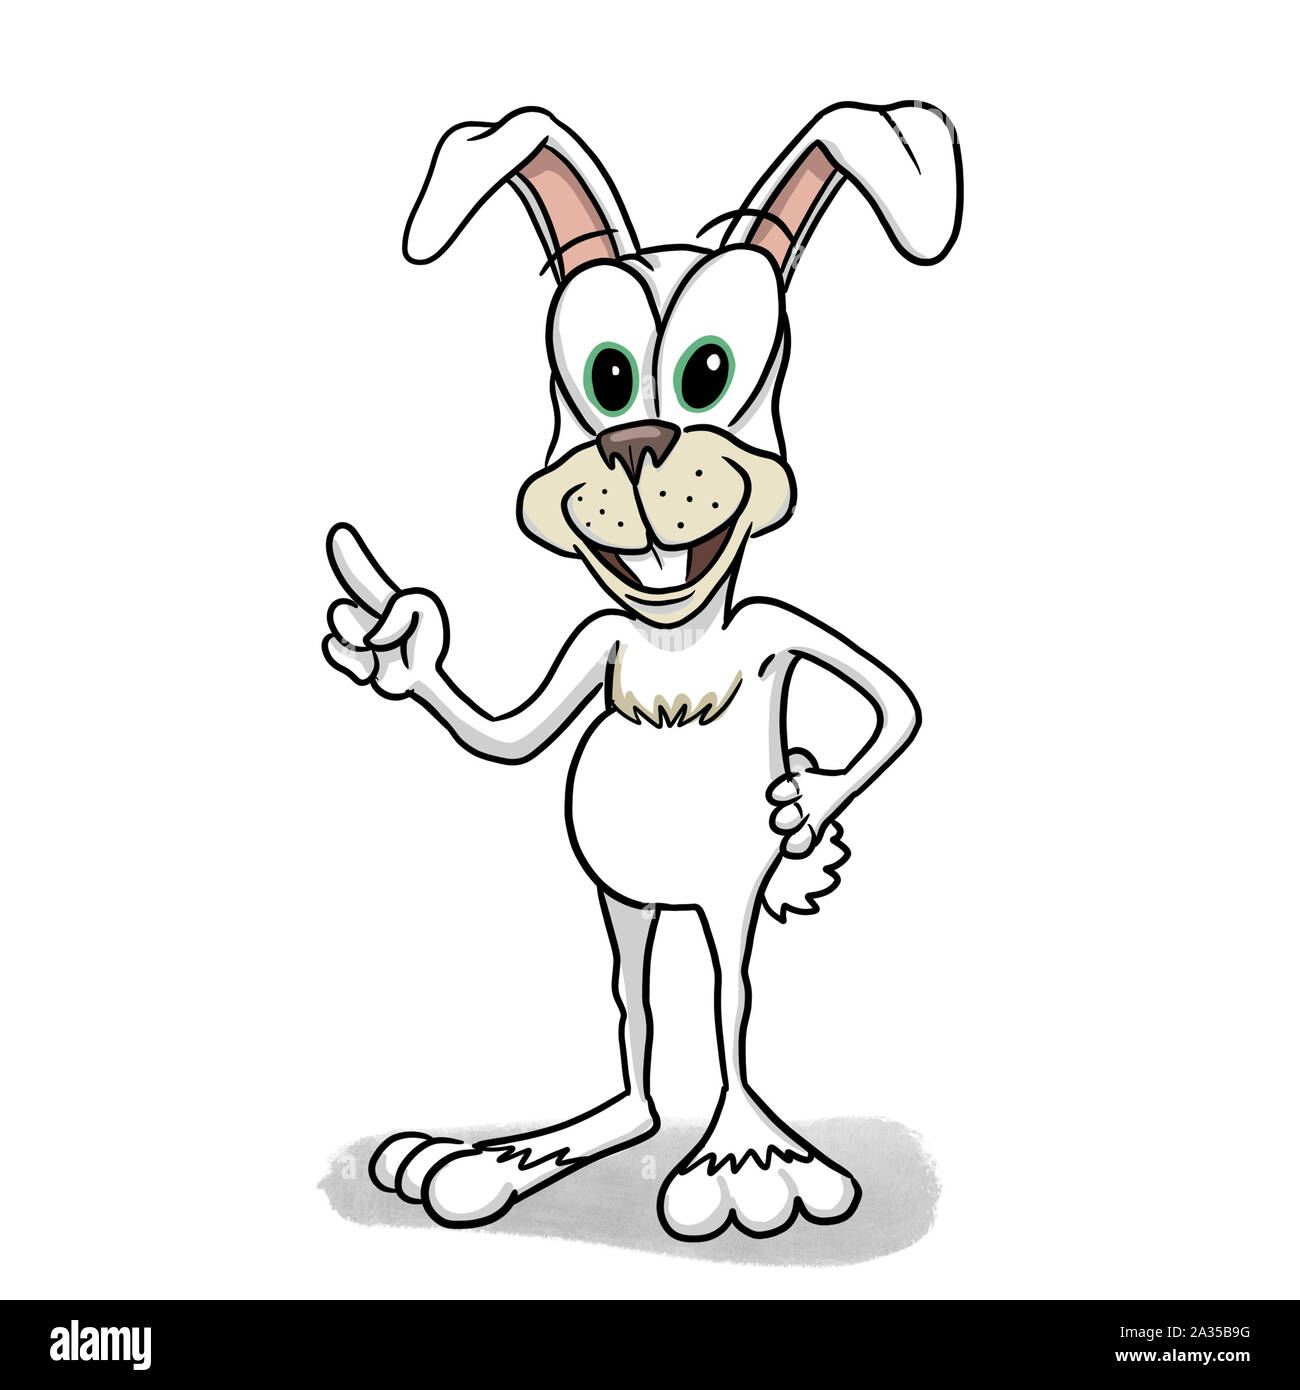 a white rabbit original character mascot pointing upwards illustration art Stock Photo